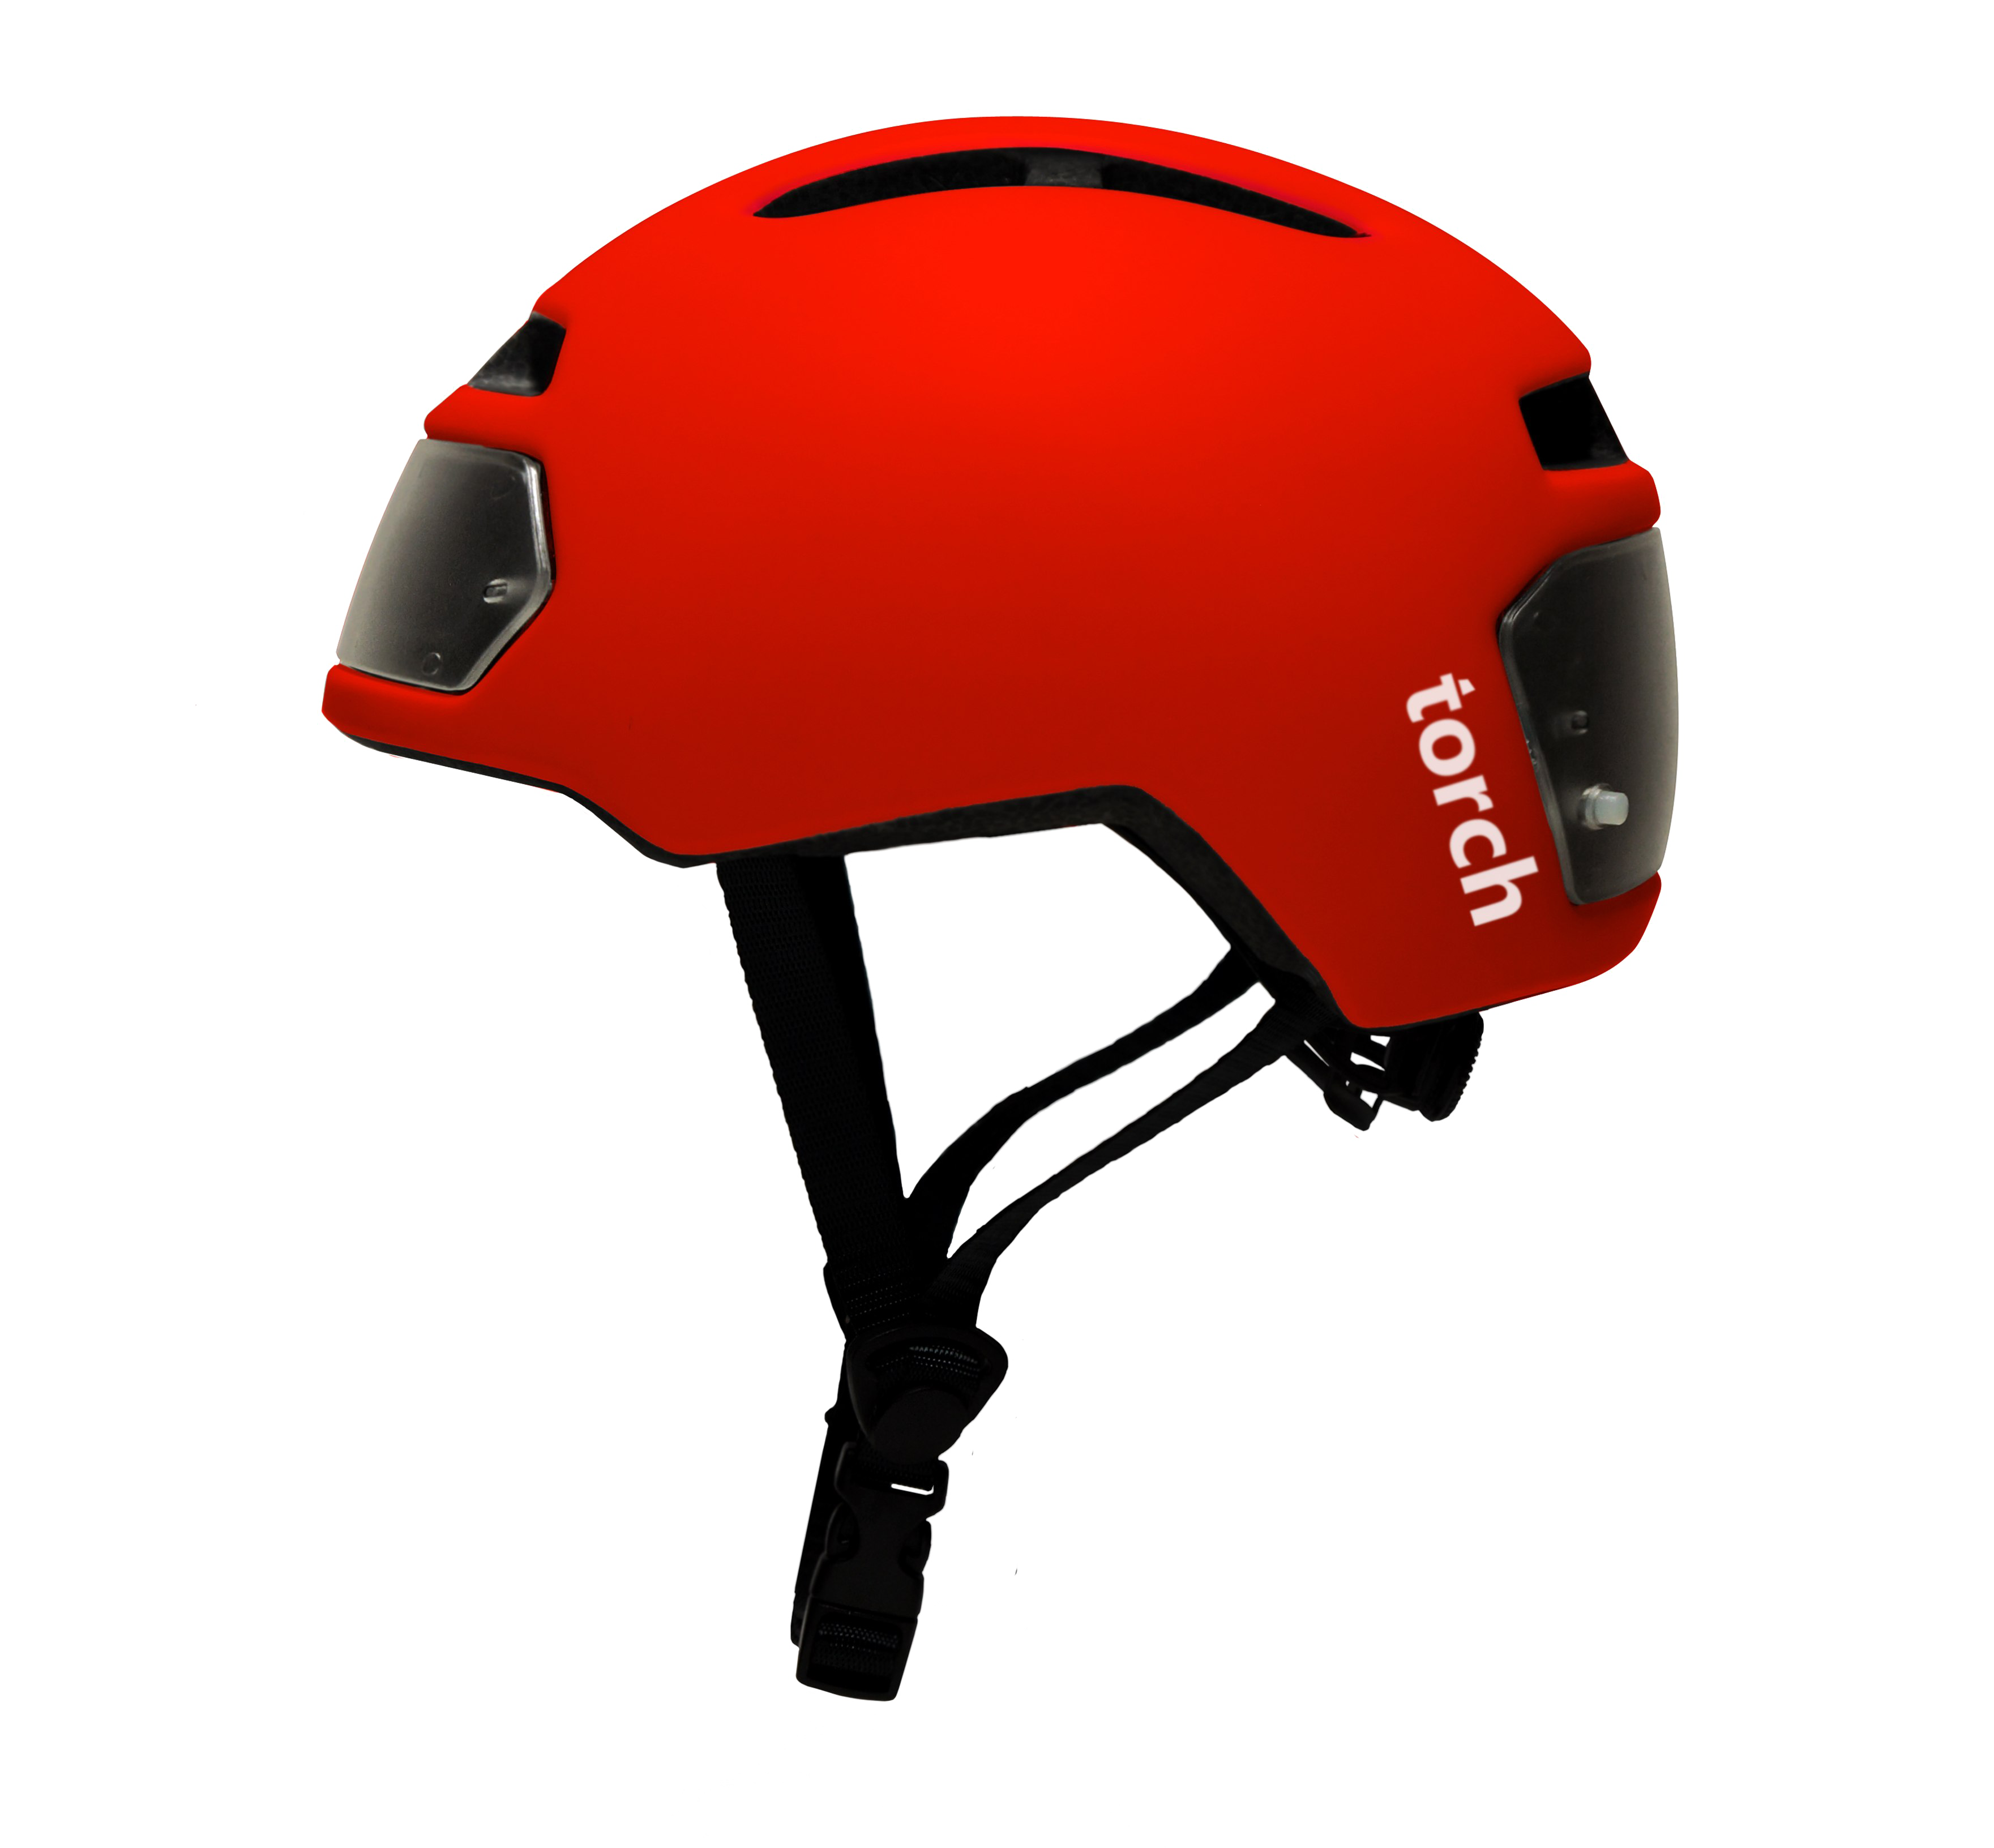 Imagen Transparente del casco de bicicleta